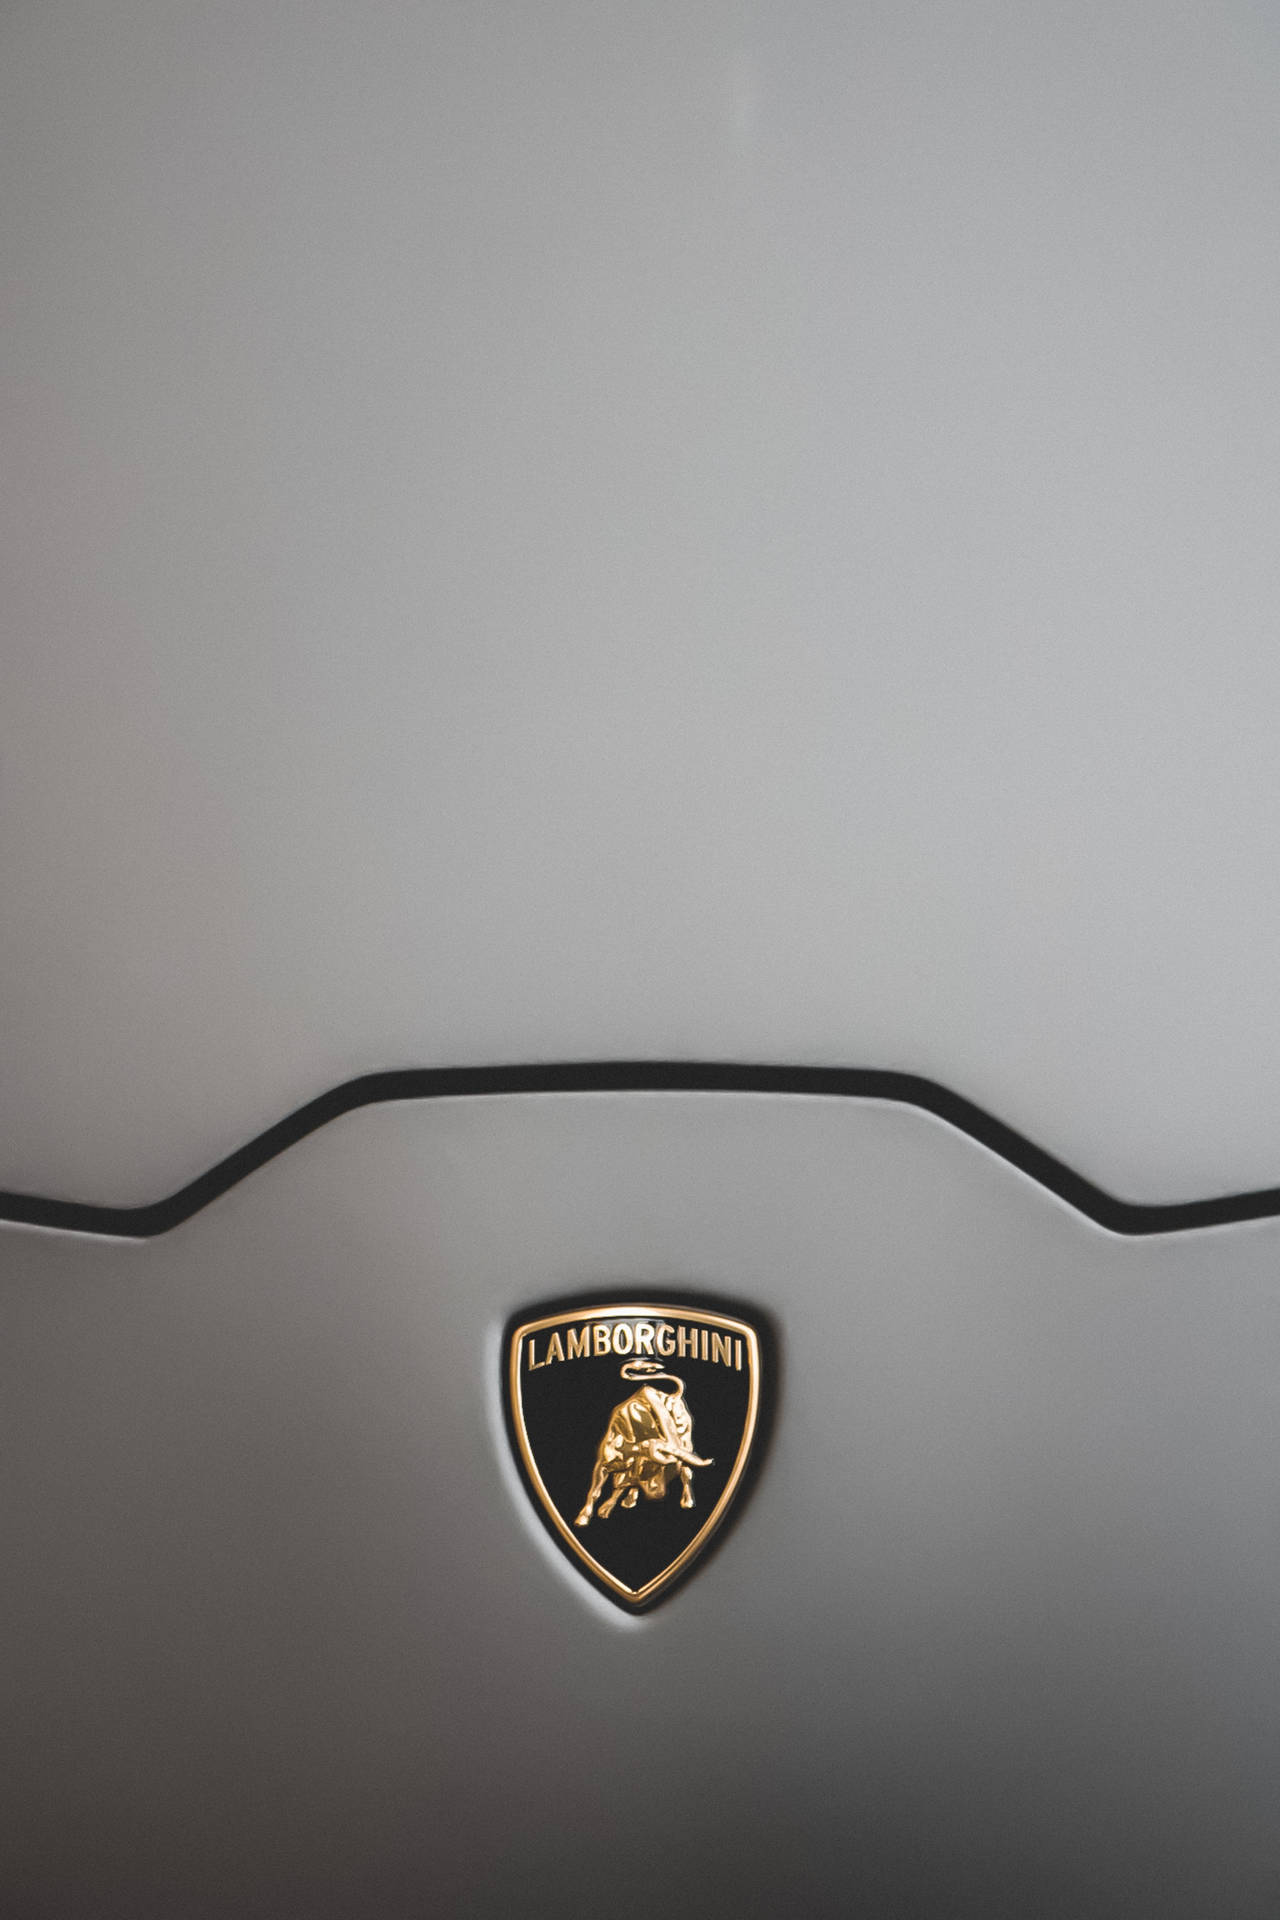 4472X6708 Lamborghini Wallpaper and Background